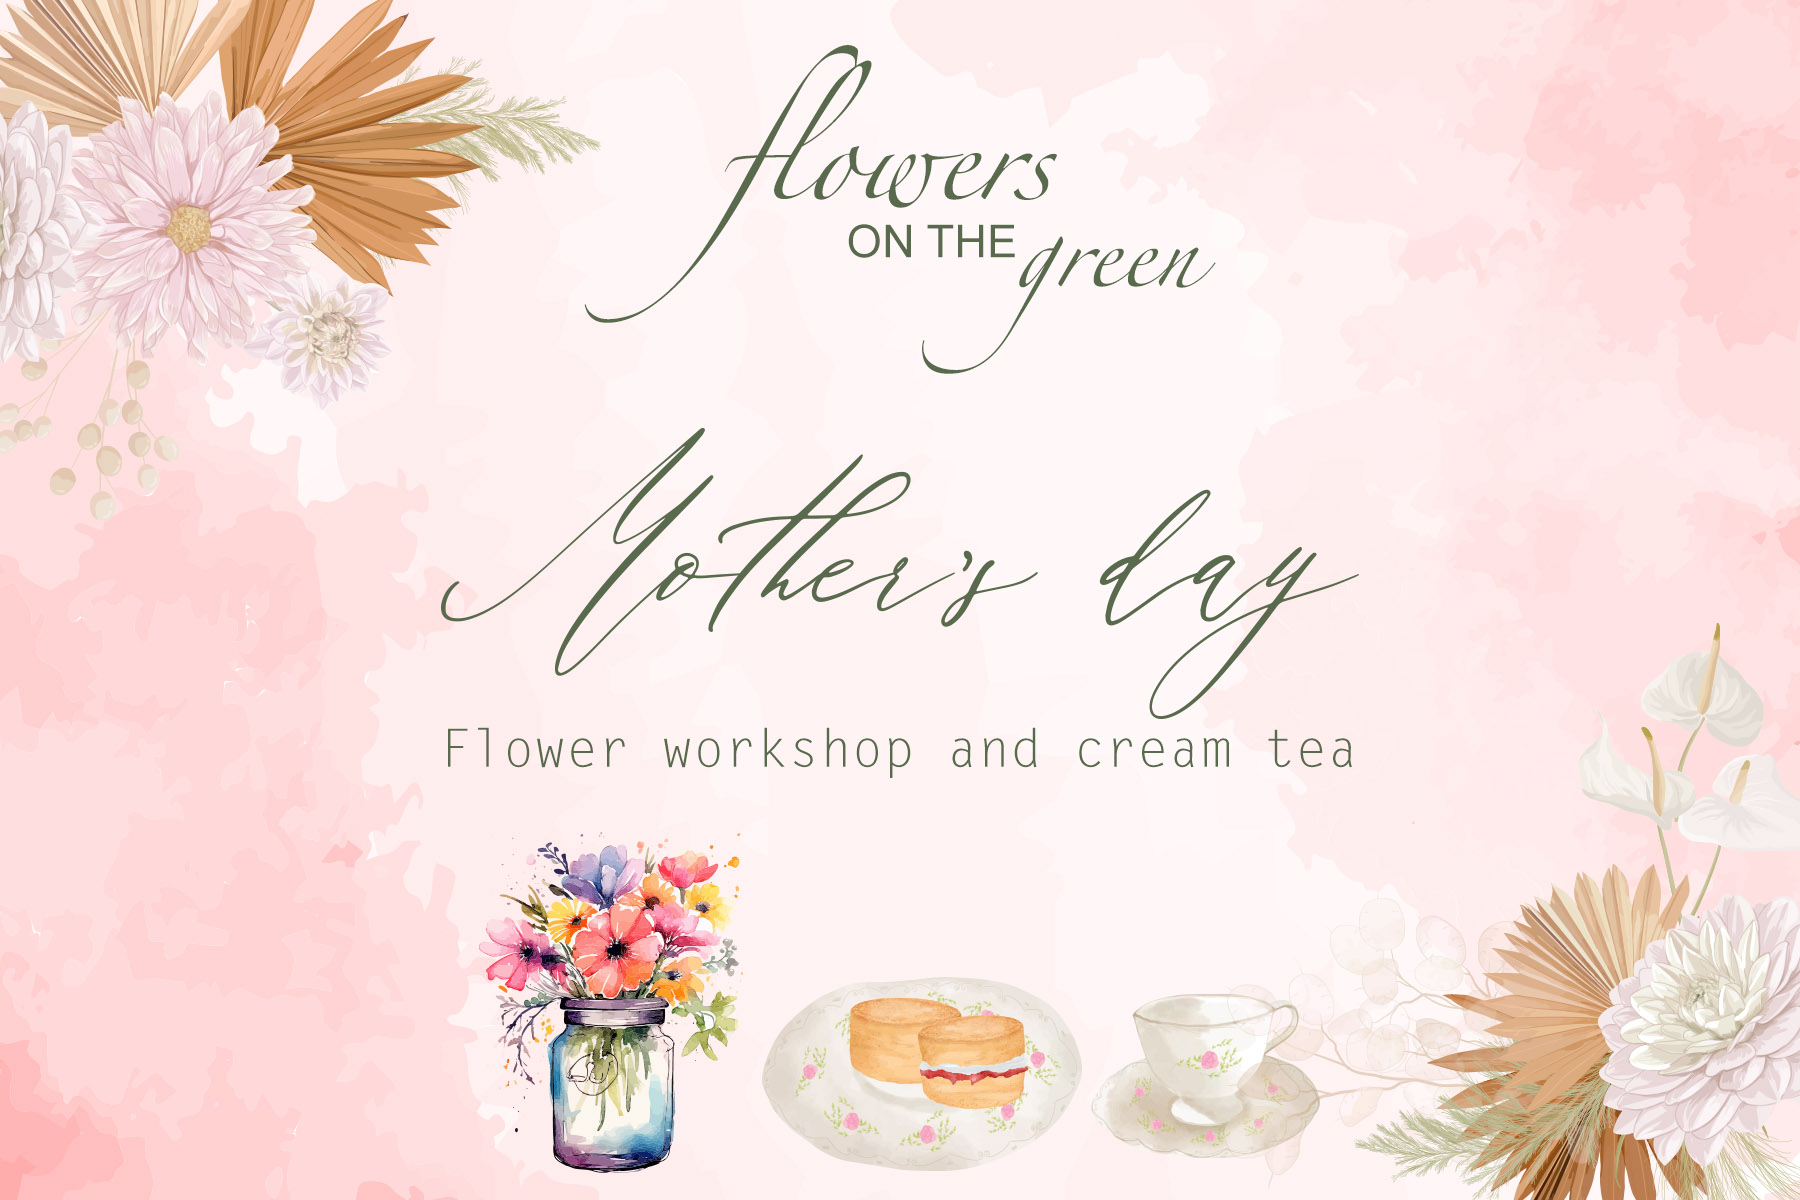 Mother's Day Flower Workshop Cream Tea North Wootton Village Hall Norfolk Florist Flowers On The Green